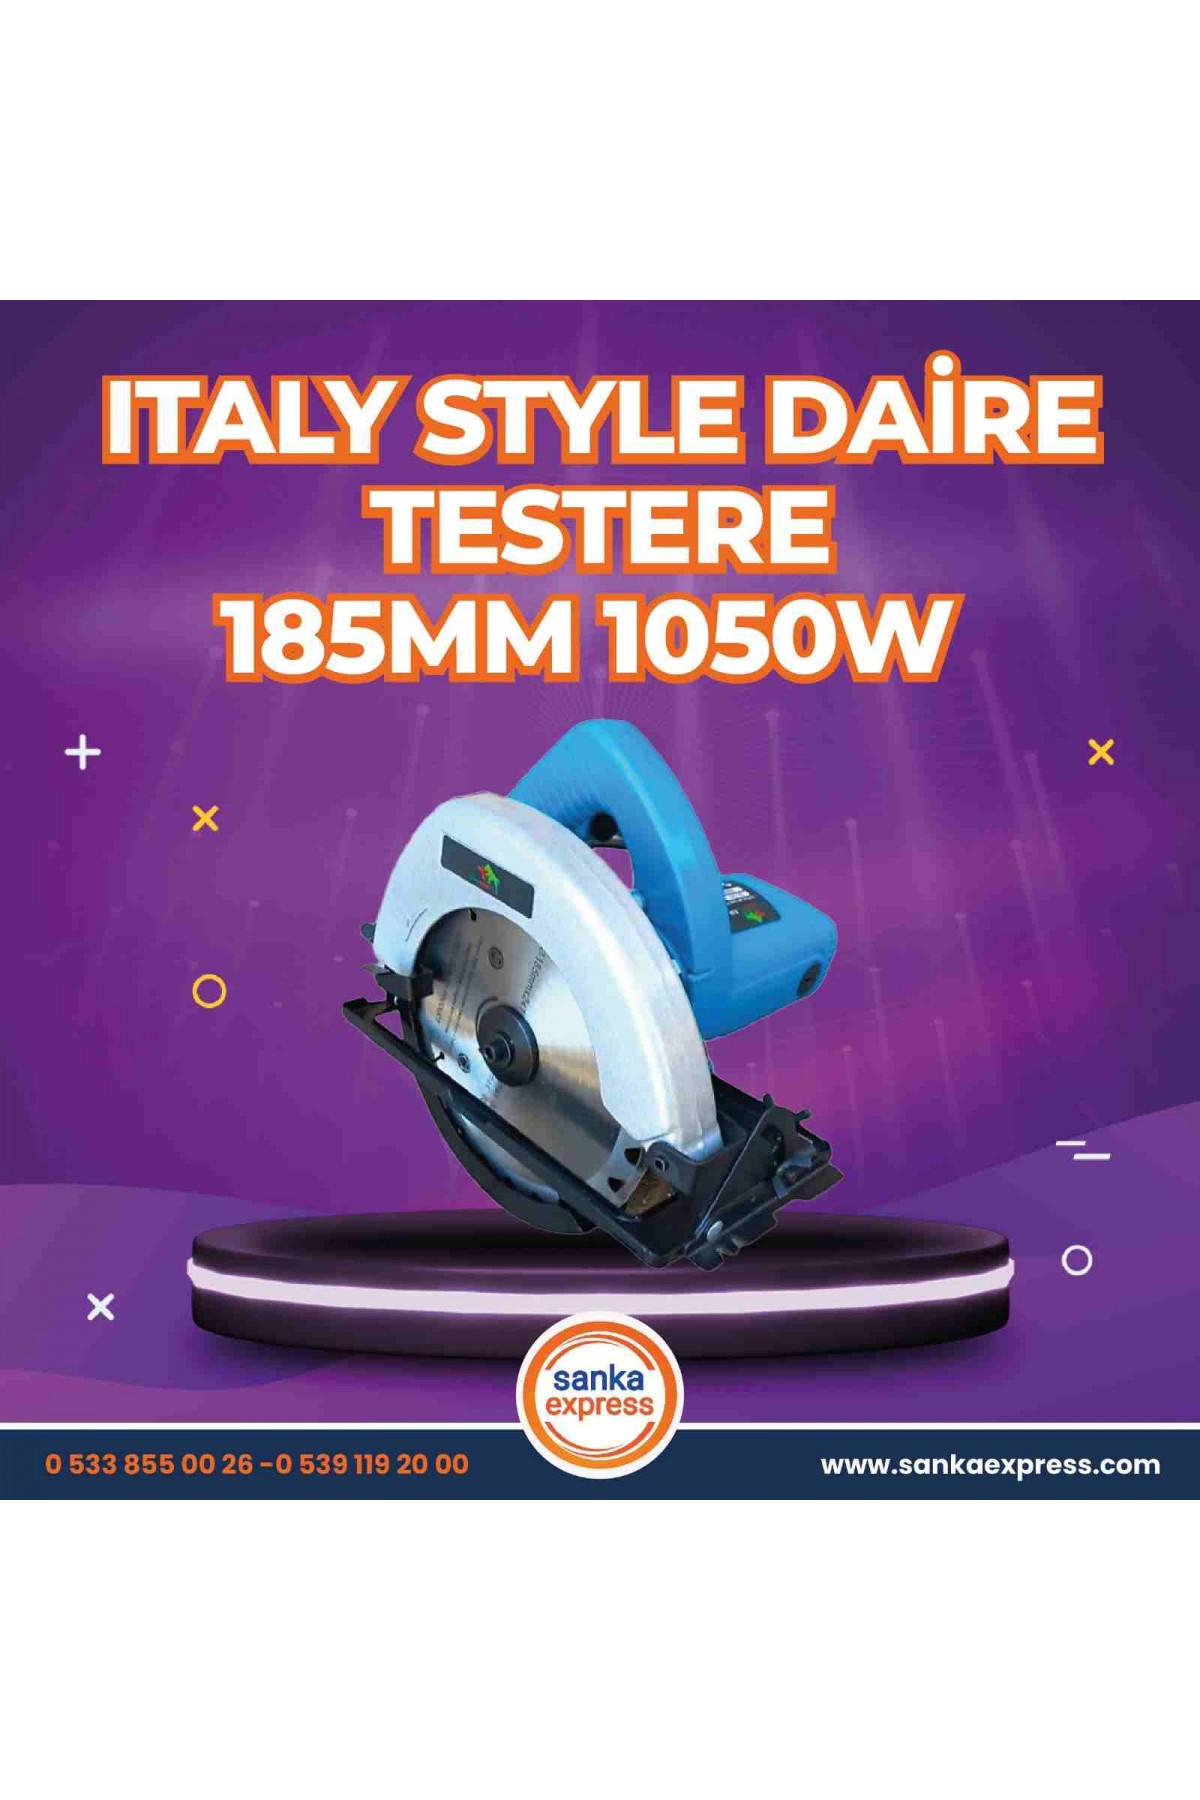 Italy Style 1050 W 185 MM Elmas Ağızlı Daire Testere